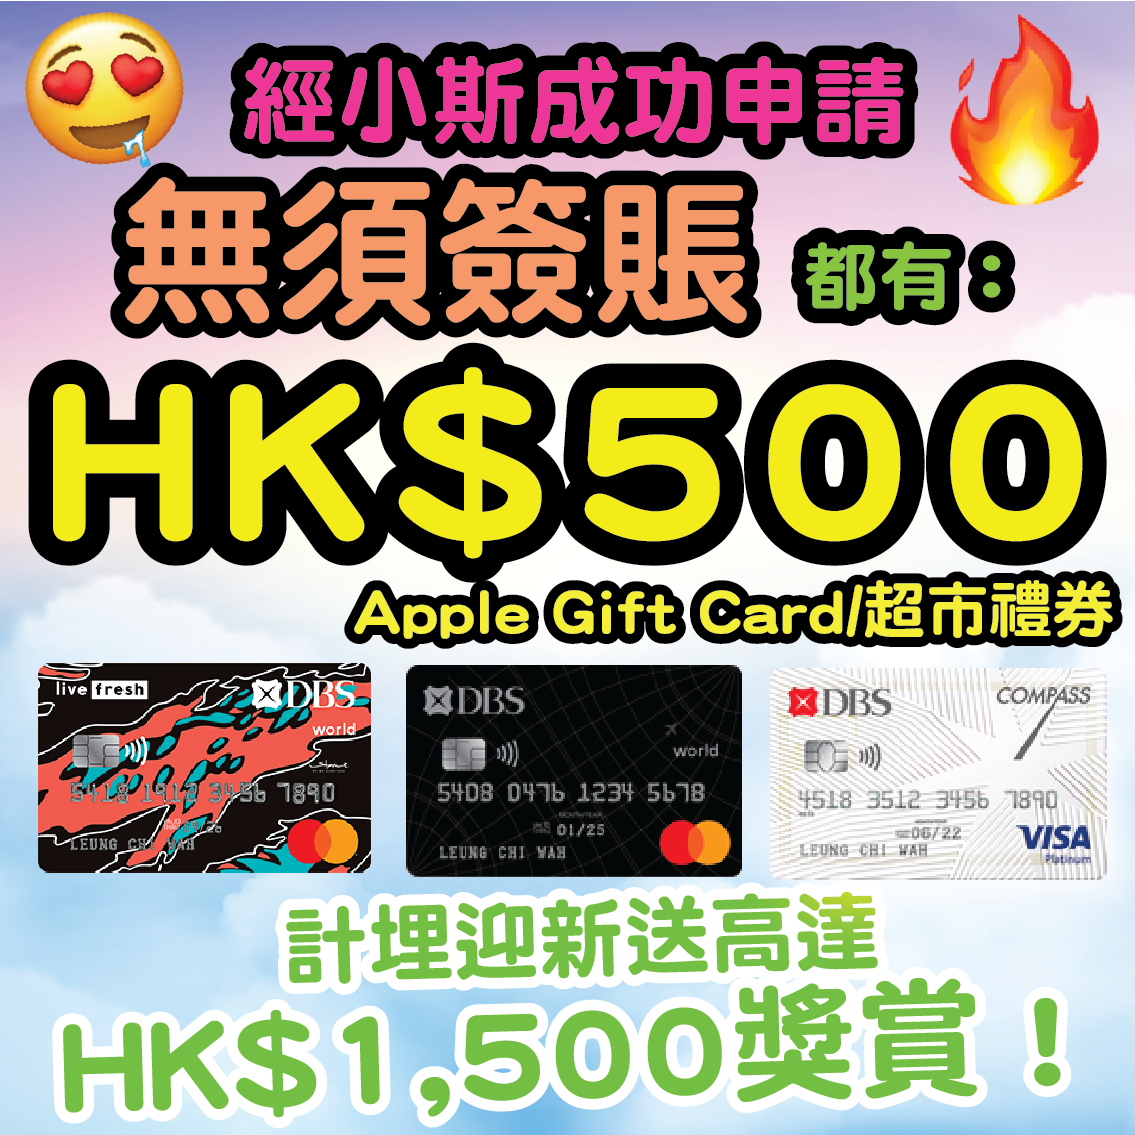 【🔥🔥🔥DBS送錢呀❗經小斯申請指定DBS信用卡，無須簽賬批核送HK$1,000 Apple Gift Card 或 超市禮券🔥🔥🔥】迎新仲有合共高達$2,000❗DBS Live Fresh信用卡網上超市簽賬仲有5%回贈❗DBS Compass Visa逢星期三全港超市更有92折❗